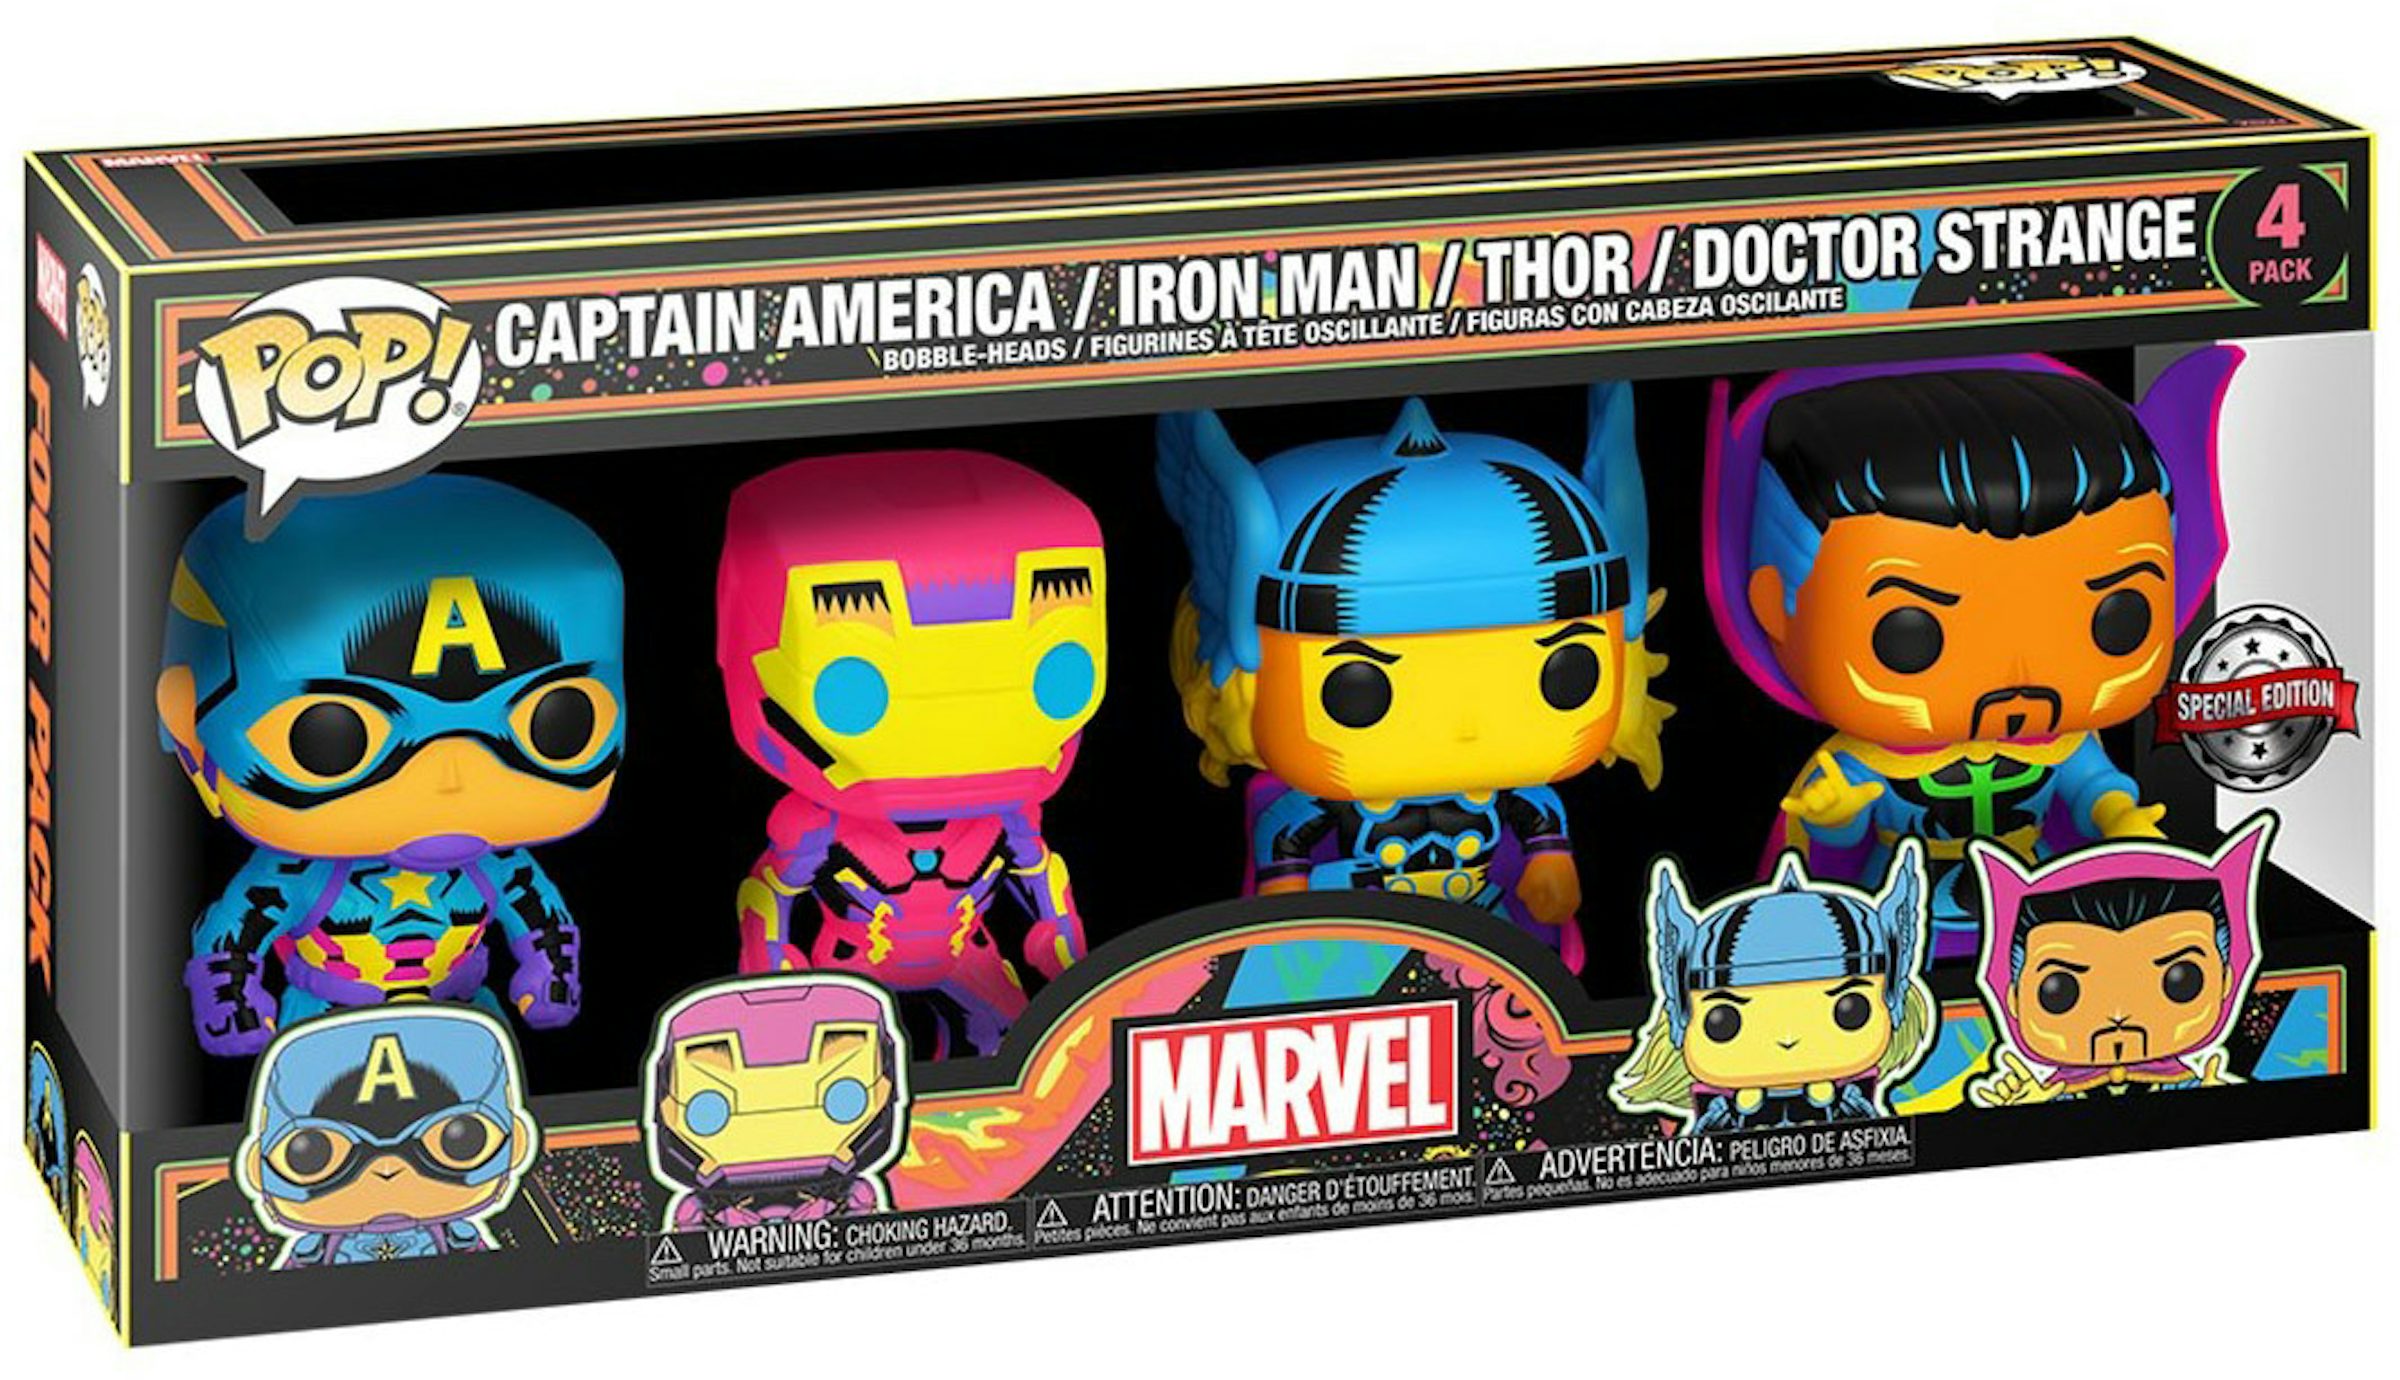 Marvel Holiday - Figurine POP! Iron Man w/Bag 9 cm - Figurines - LDLC